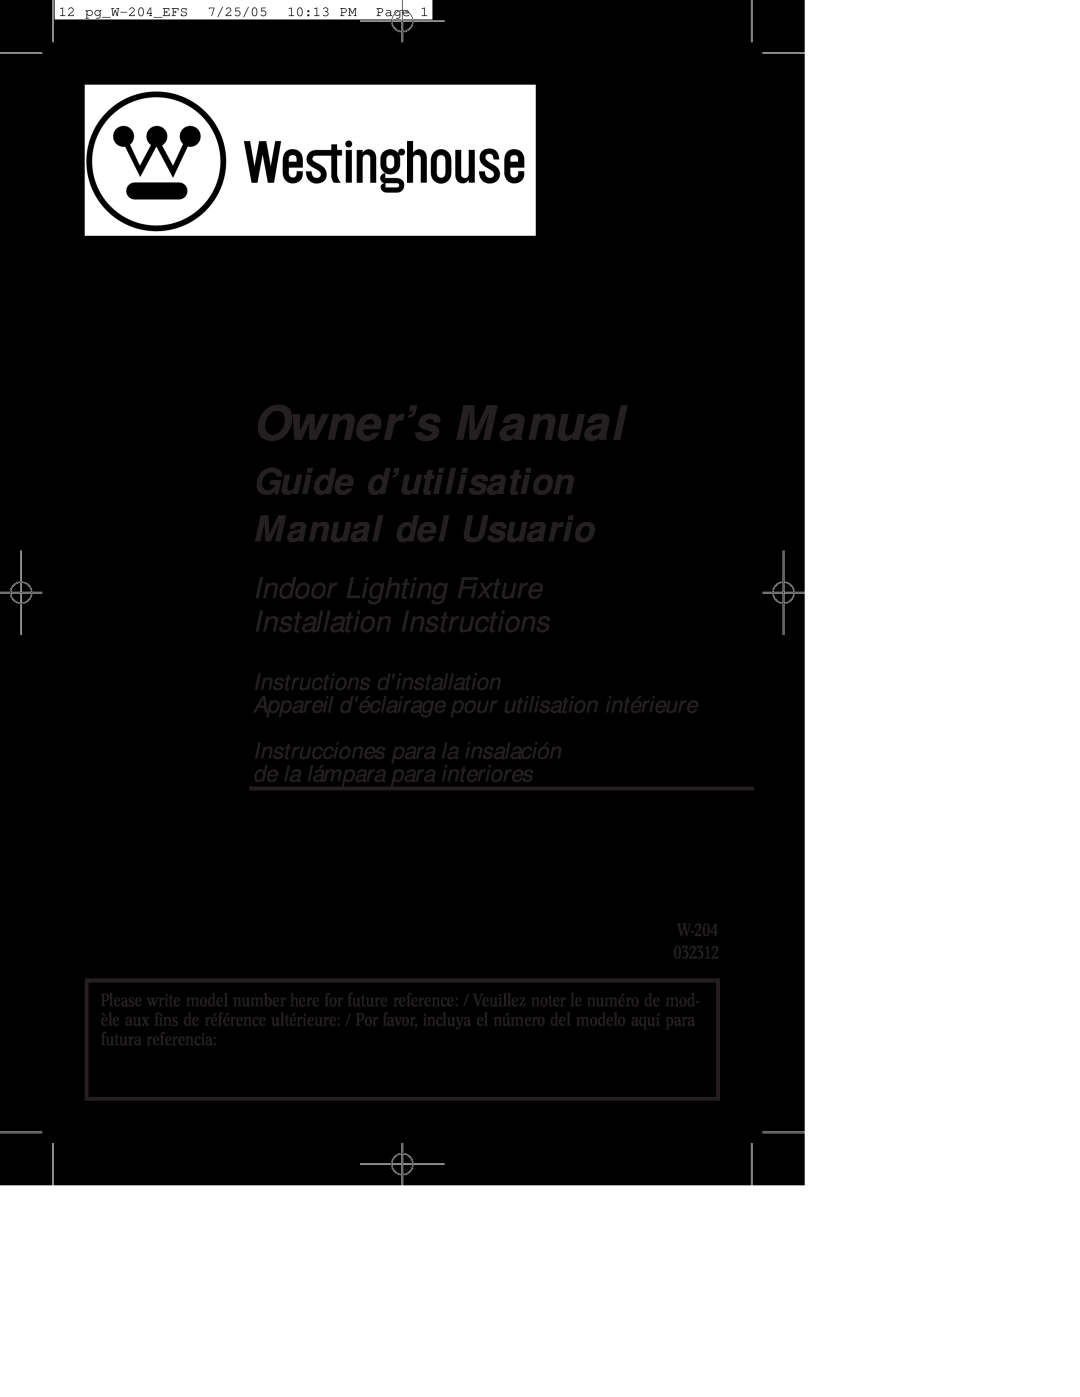 Westinghouse W-204 owner manual Guide d’utilisation Manual del Usuario, Indoor Lighting Fixture Installation Instructions 